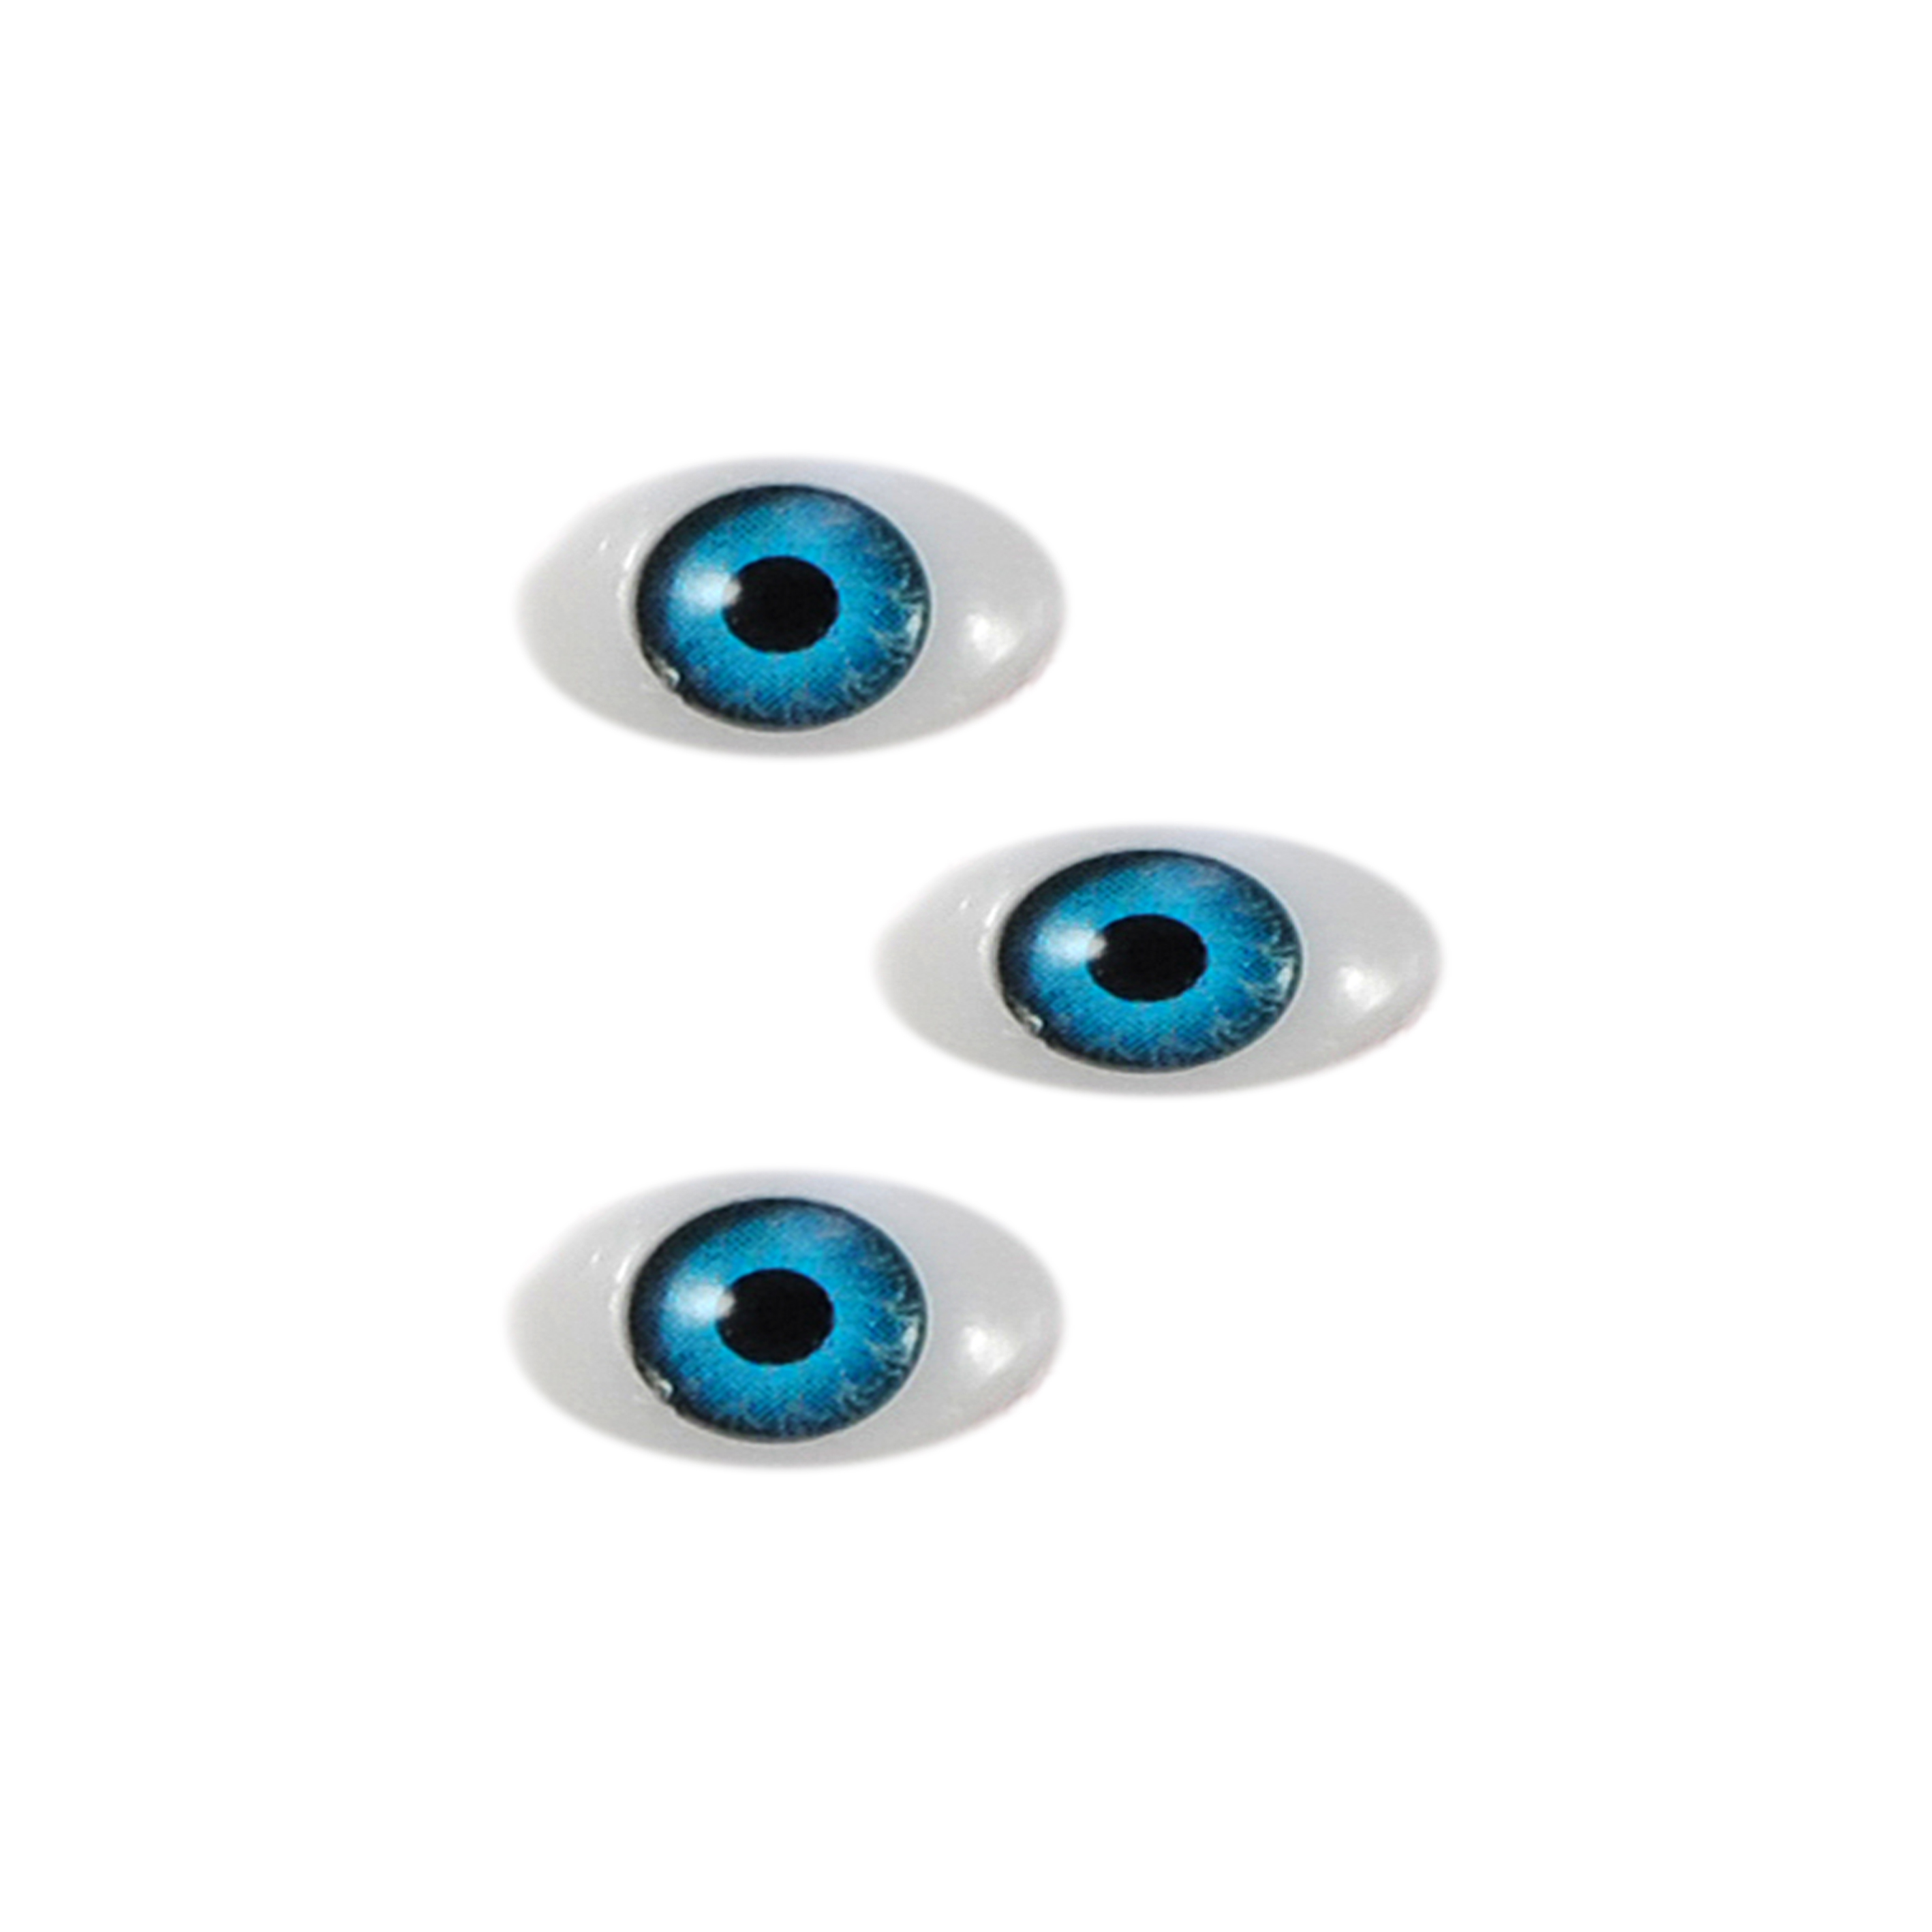 Глаз натуральная форма, № 5060 6мм голубой, 1тыс.шт. Глазики натуральн. форма